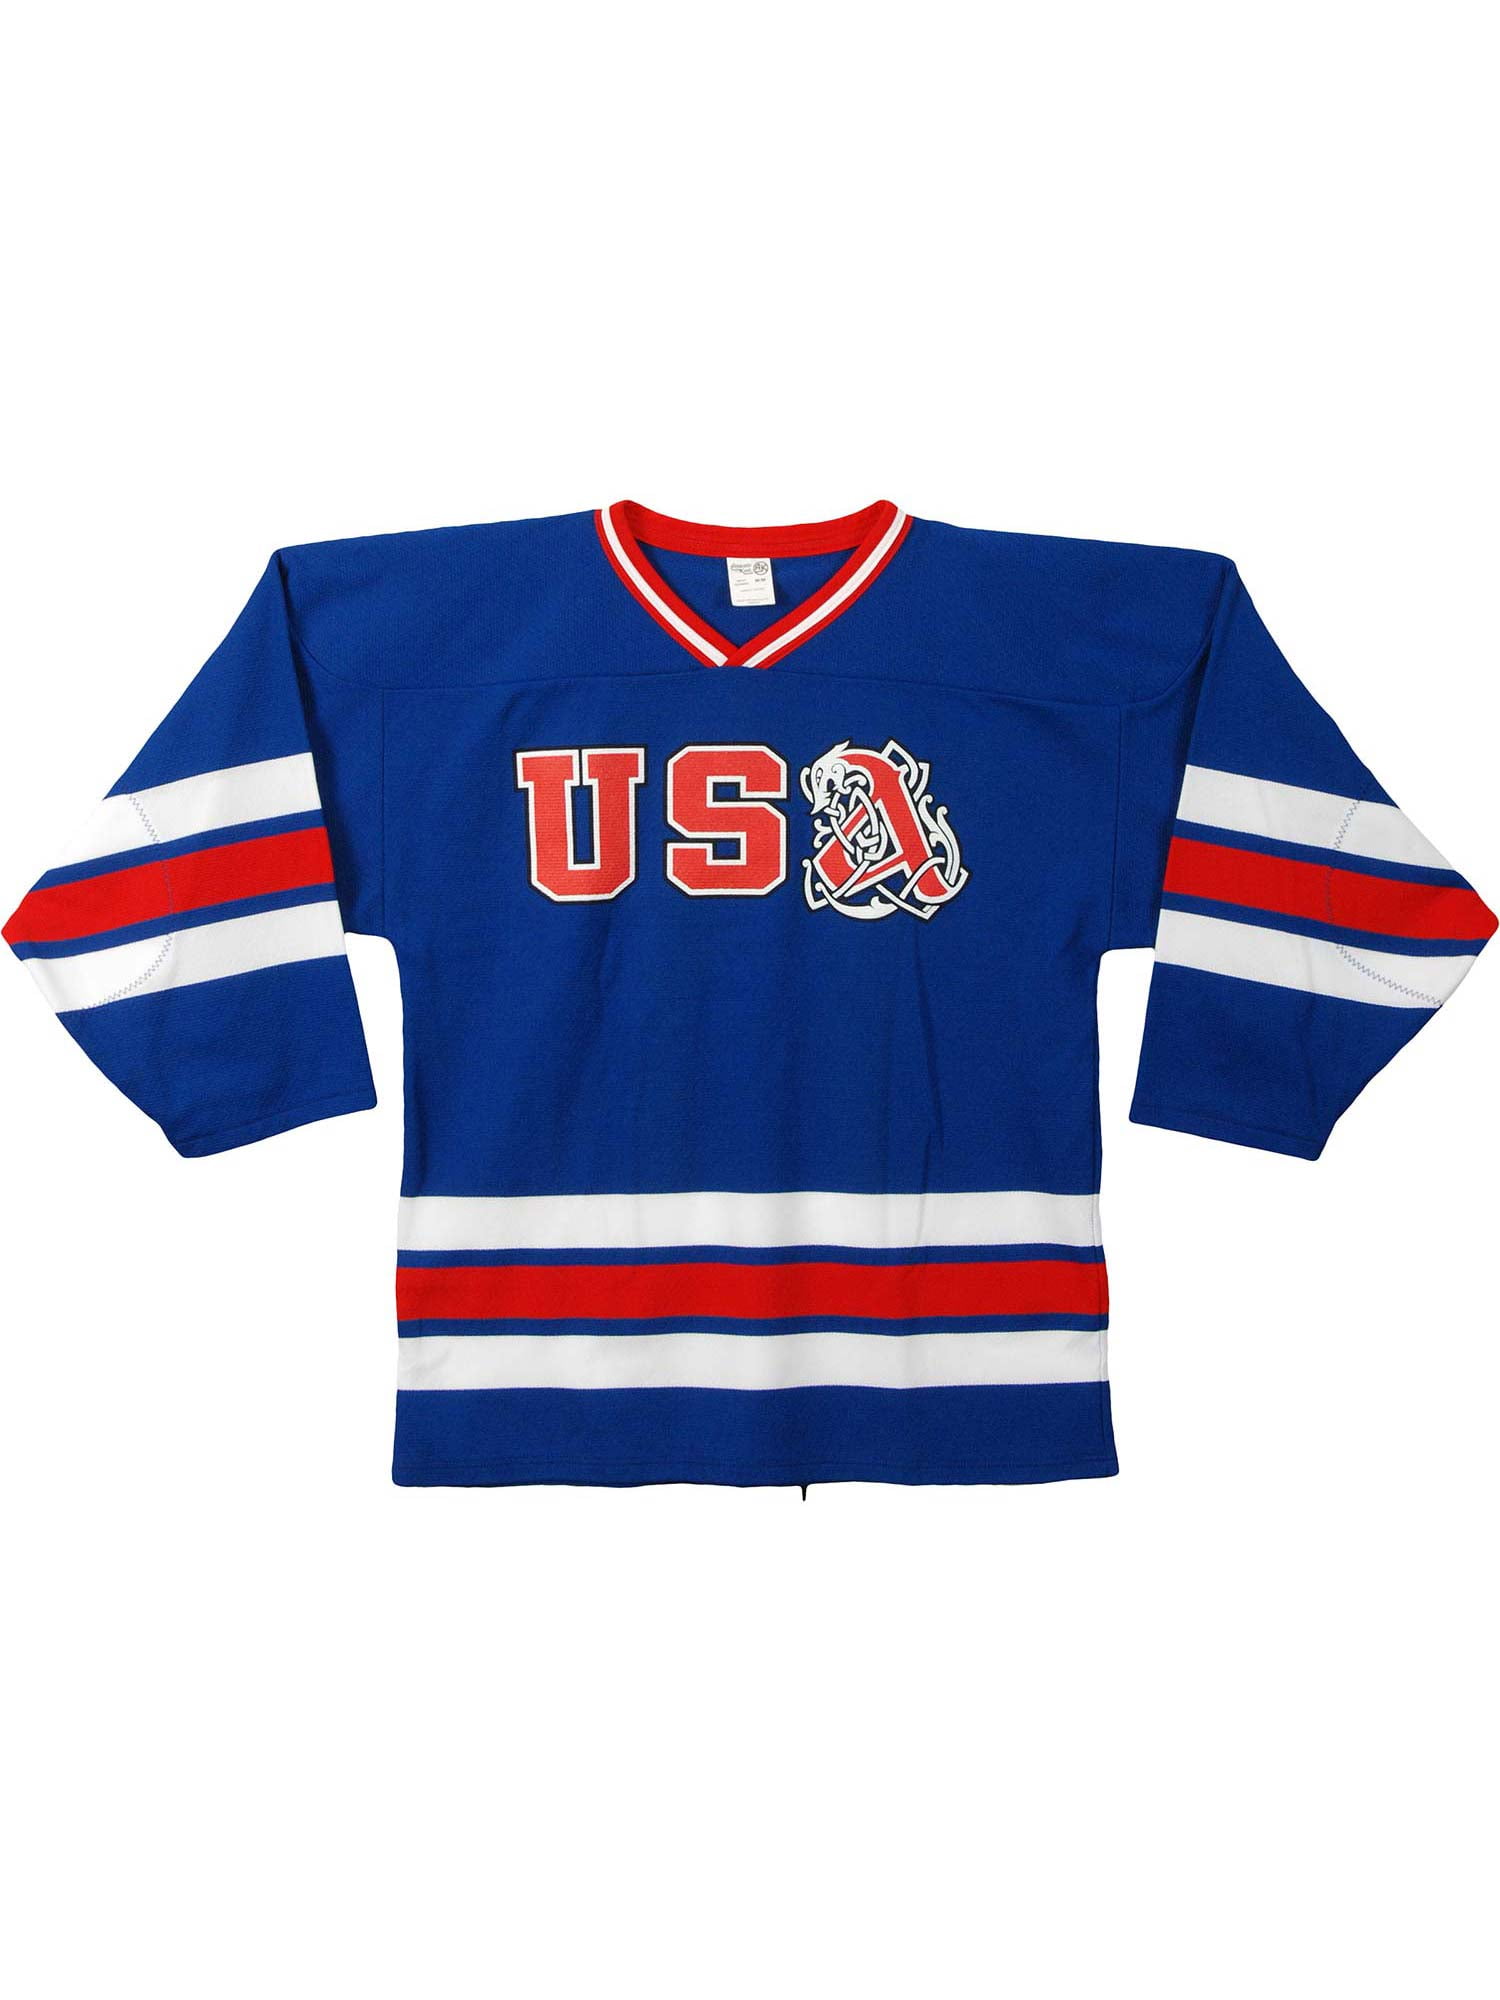 Download Amon Amarth Men's USA Hockey Jersey Blue - Walmart.com